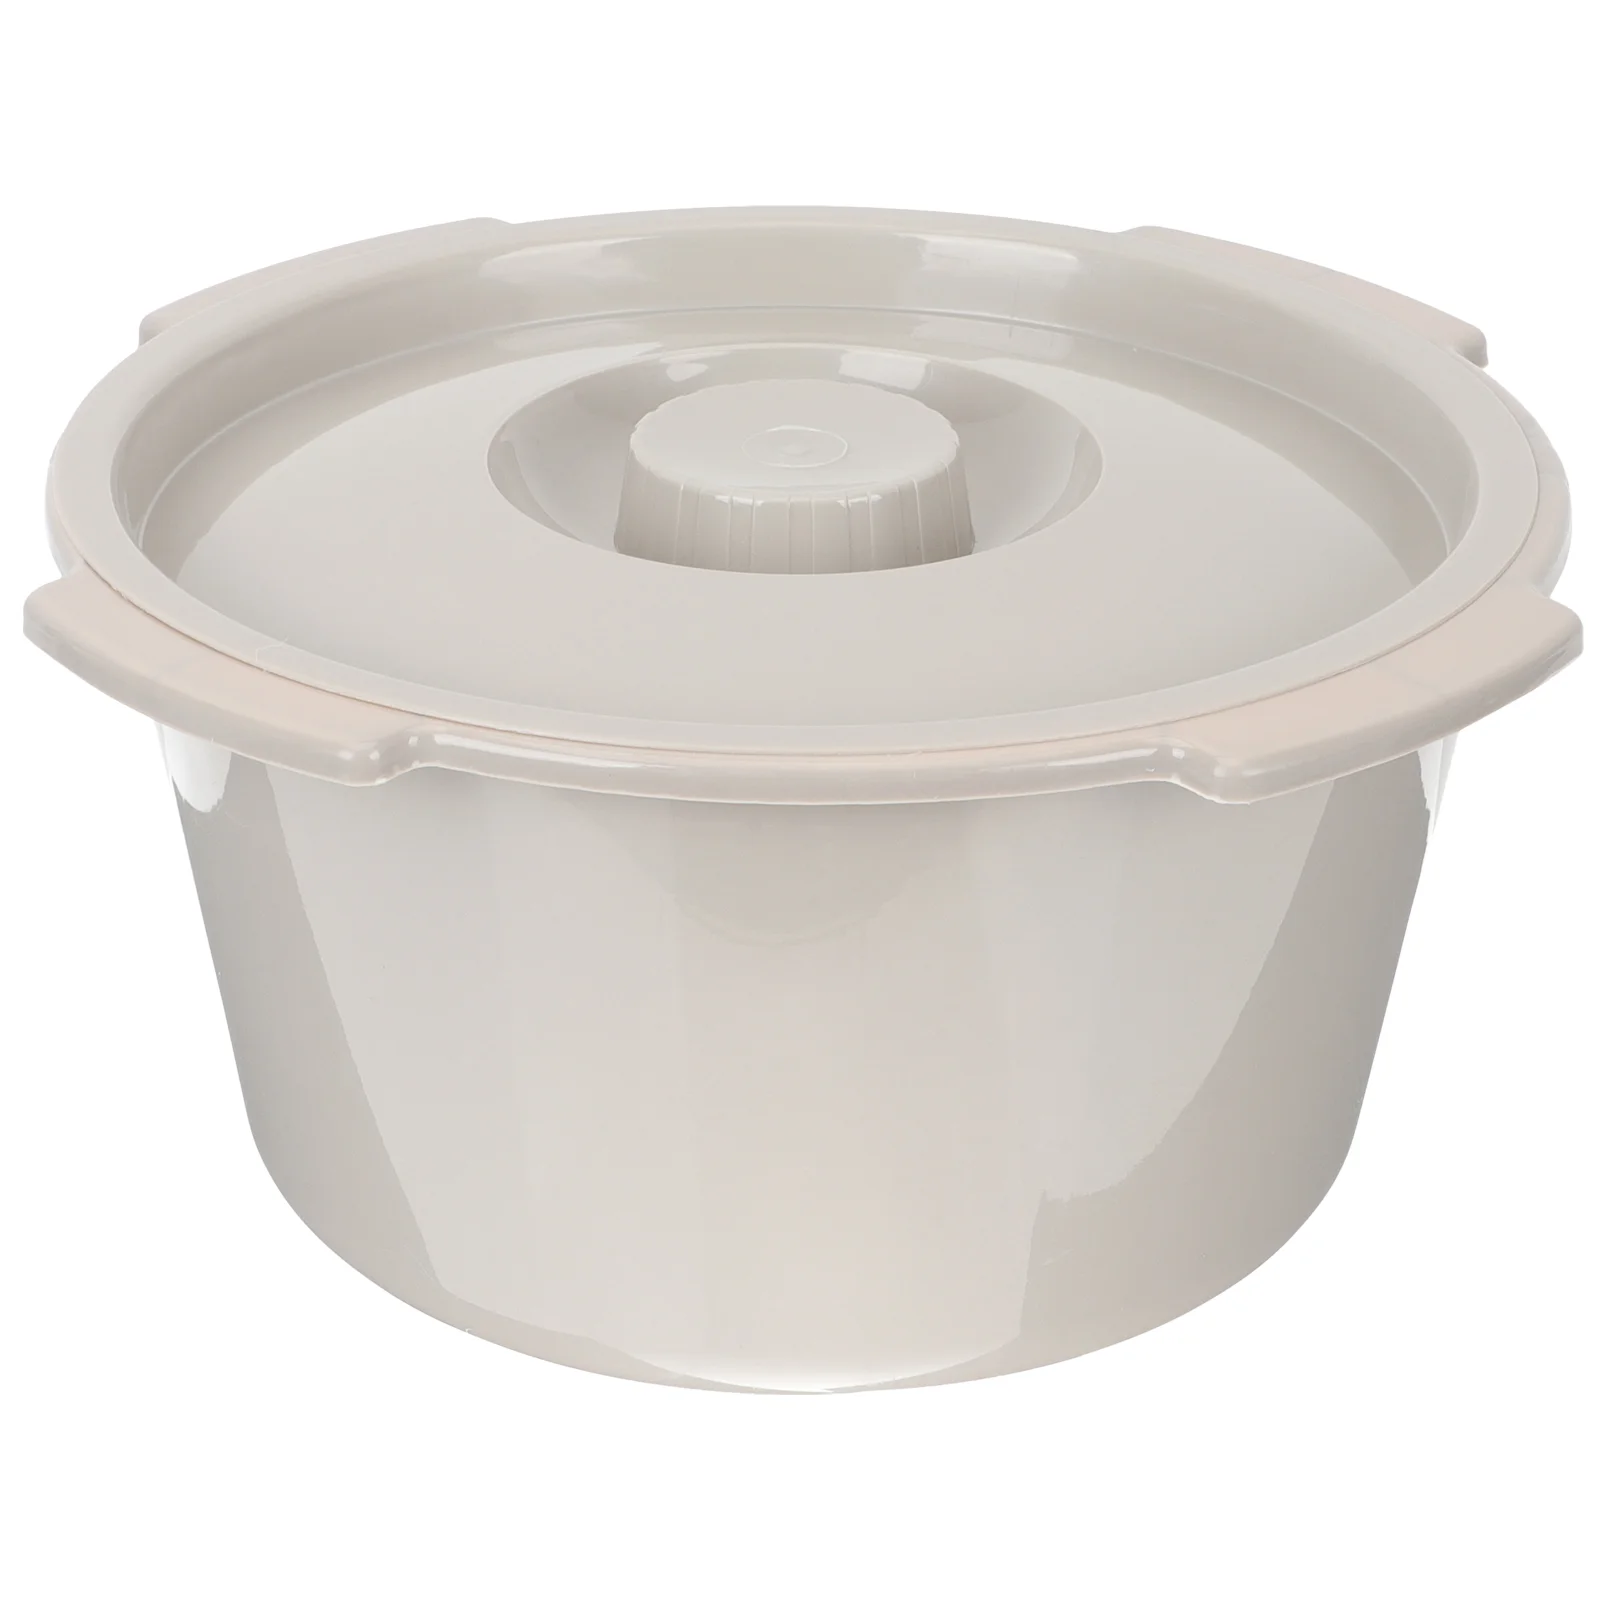 

Pot Urine Urinal Bedpan Spittoon Chamber Bucket Toilet Lid Portable Pee Potty Elderly Bottle Commode Bedpans Basin Plastic